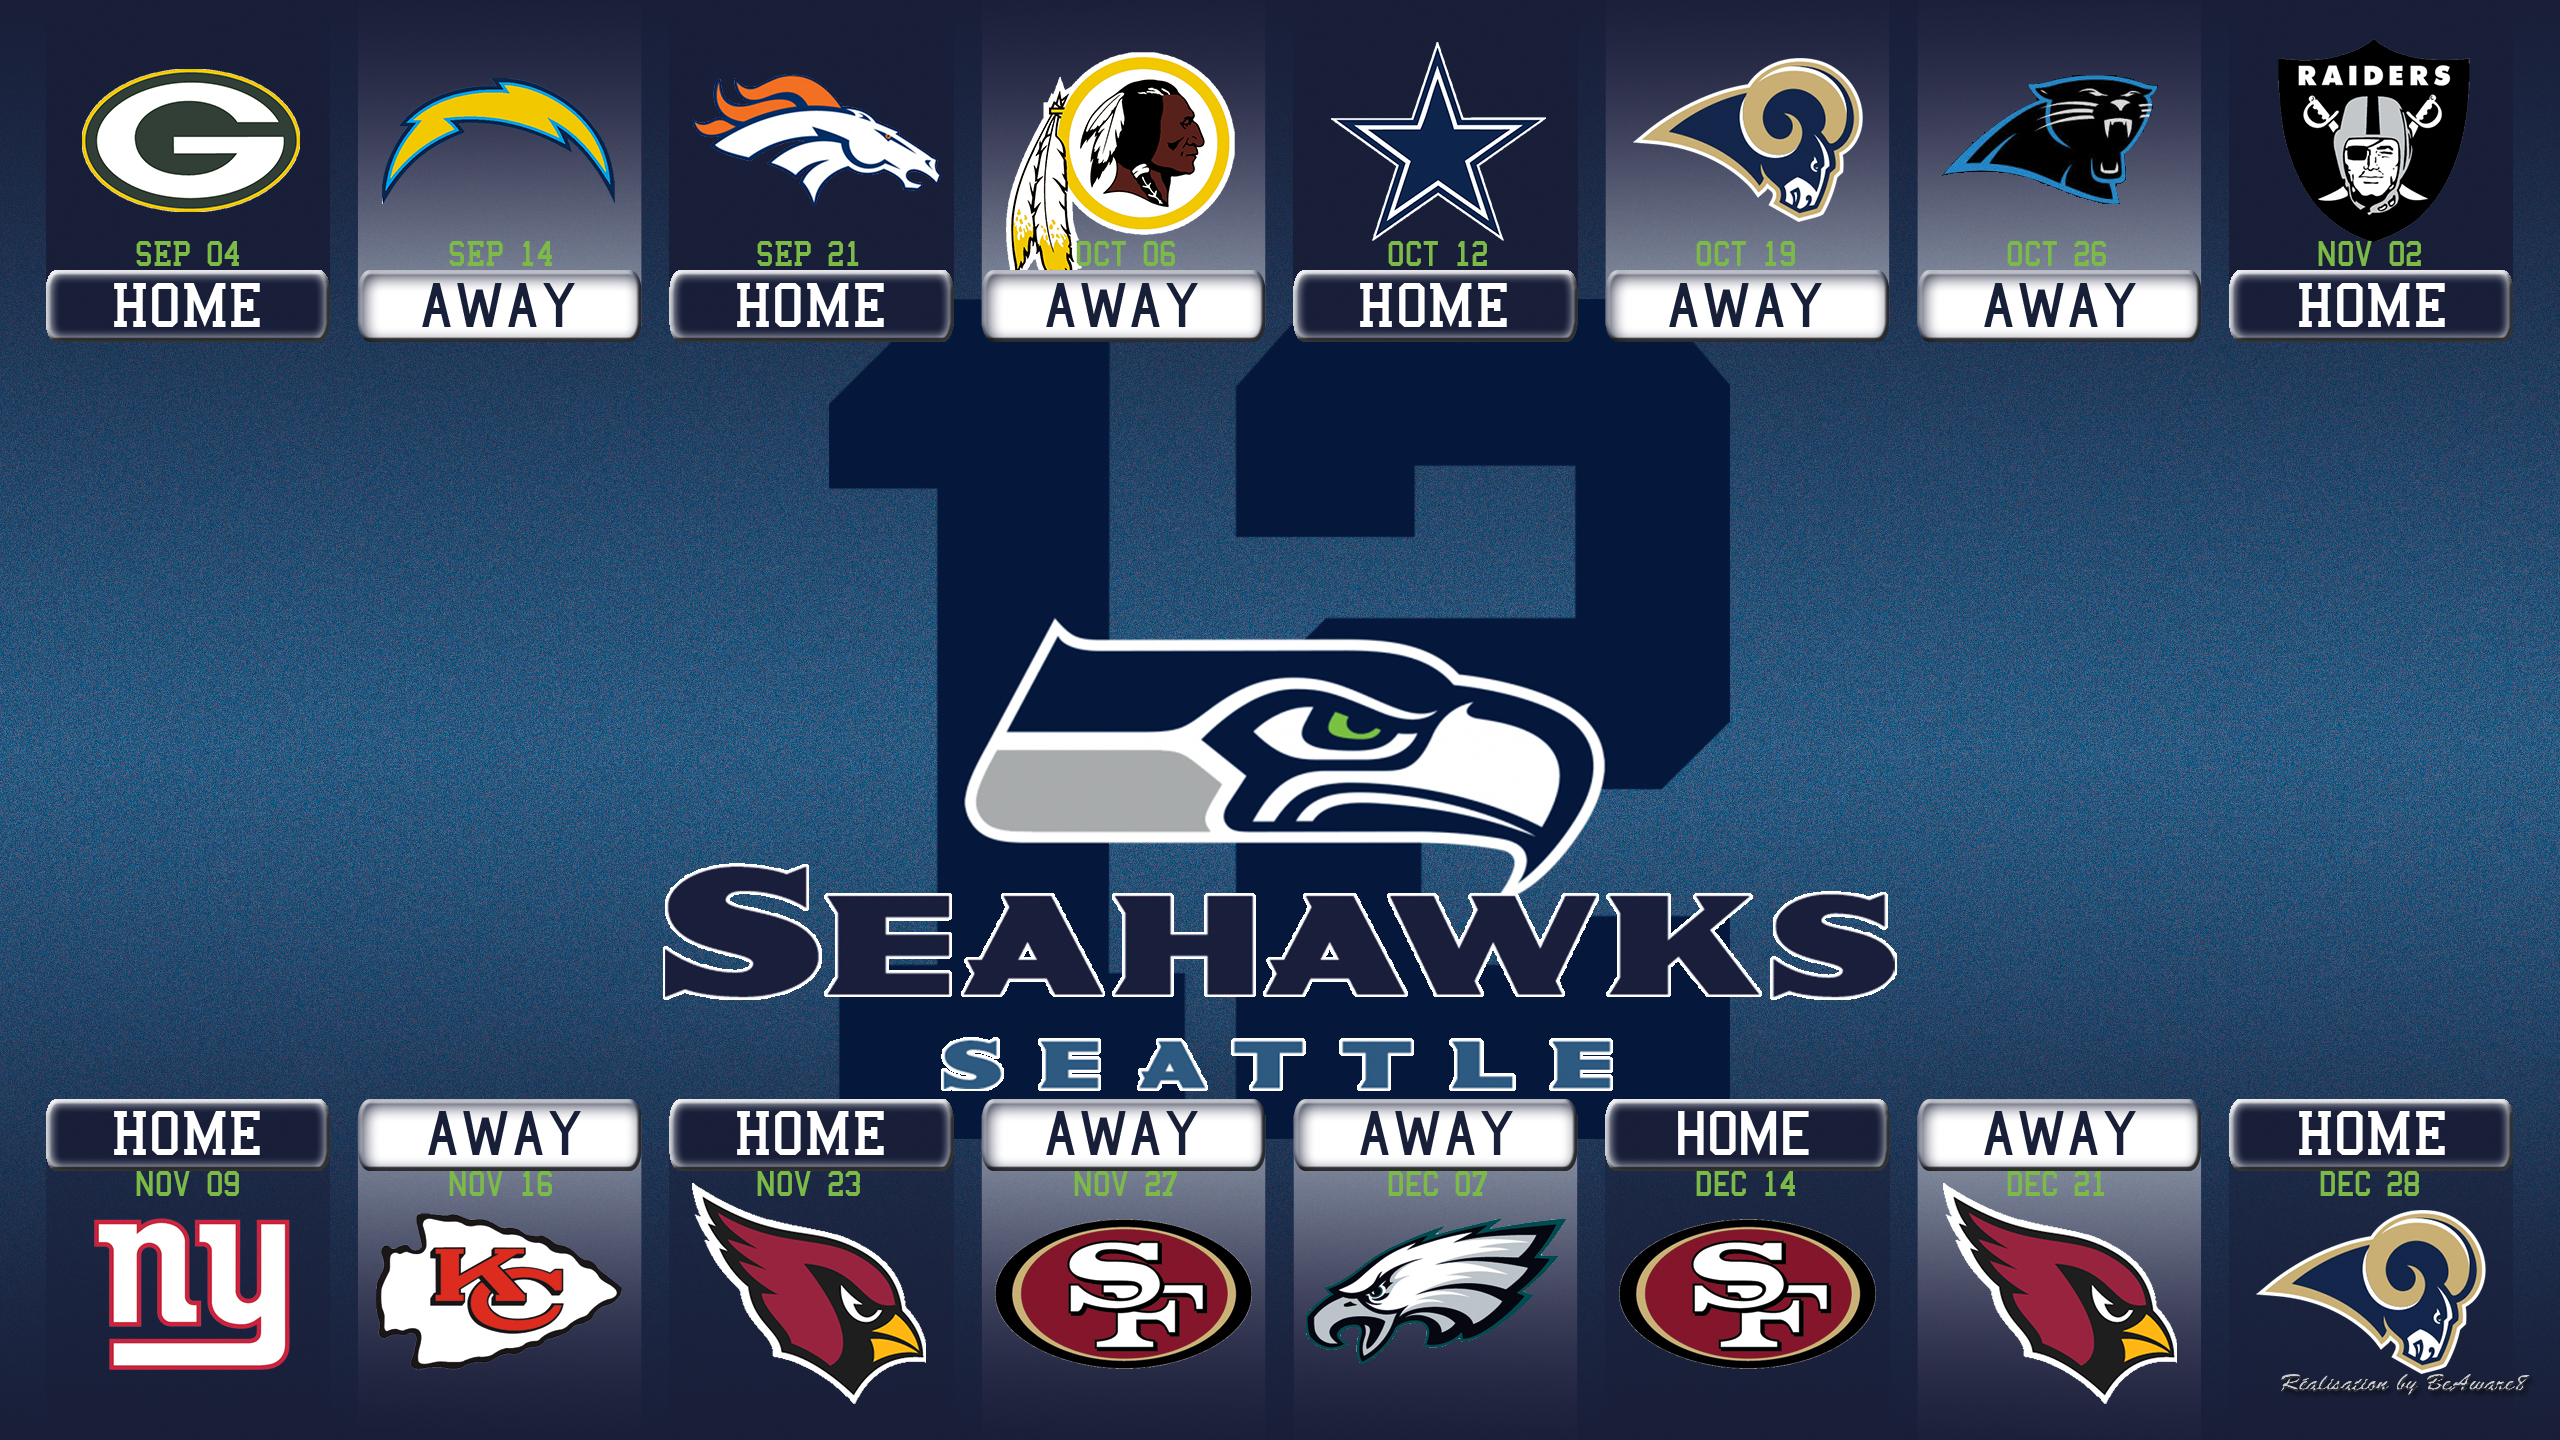 Seattle Seahawks Calandar Saison 2014 by BeAware8 on DeviantArt